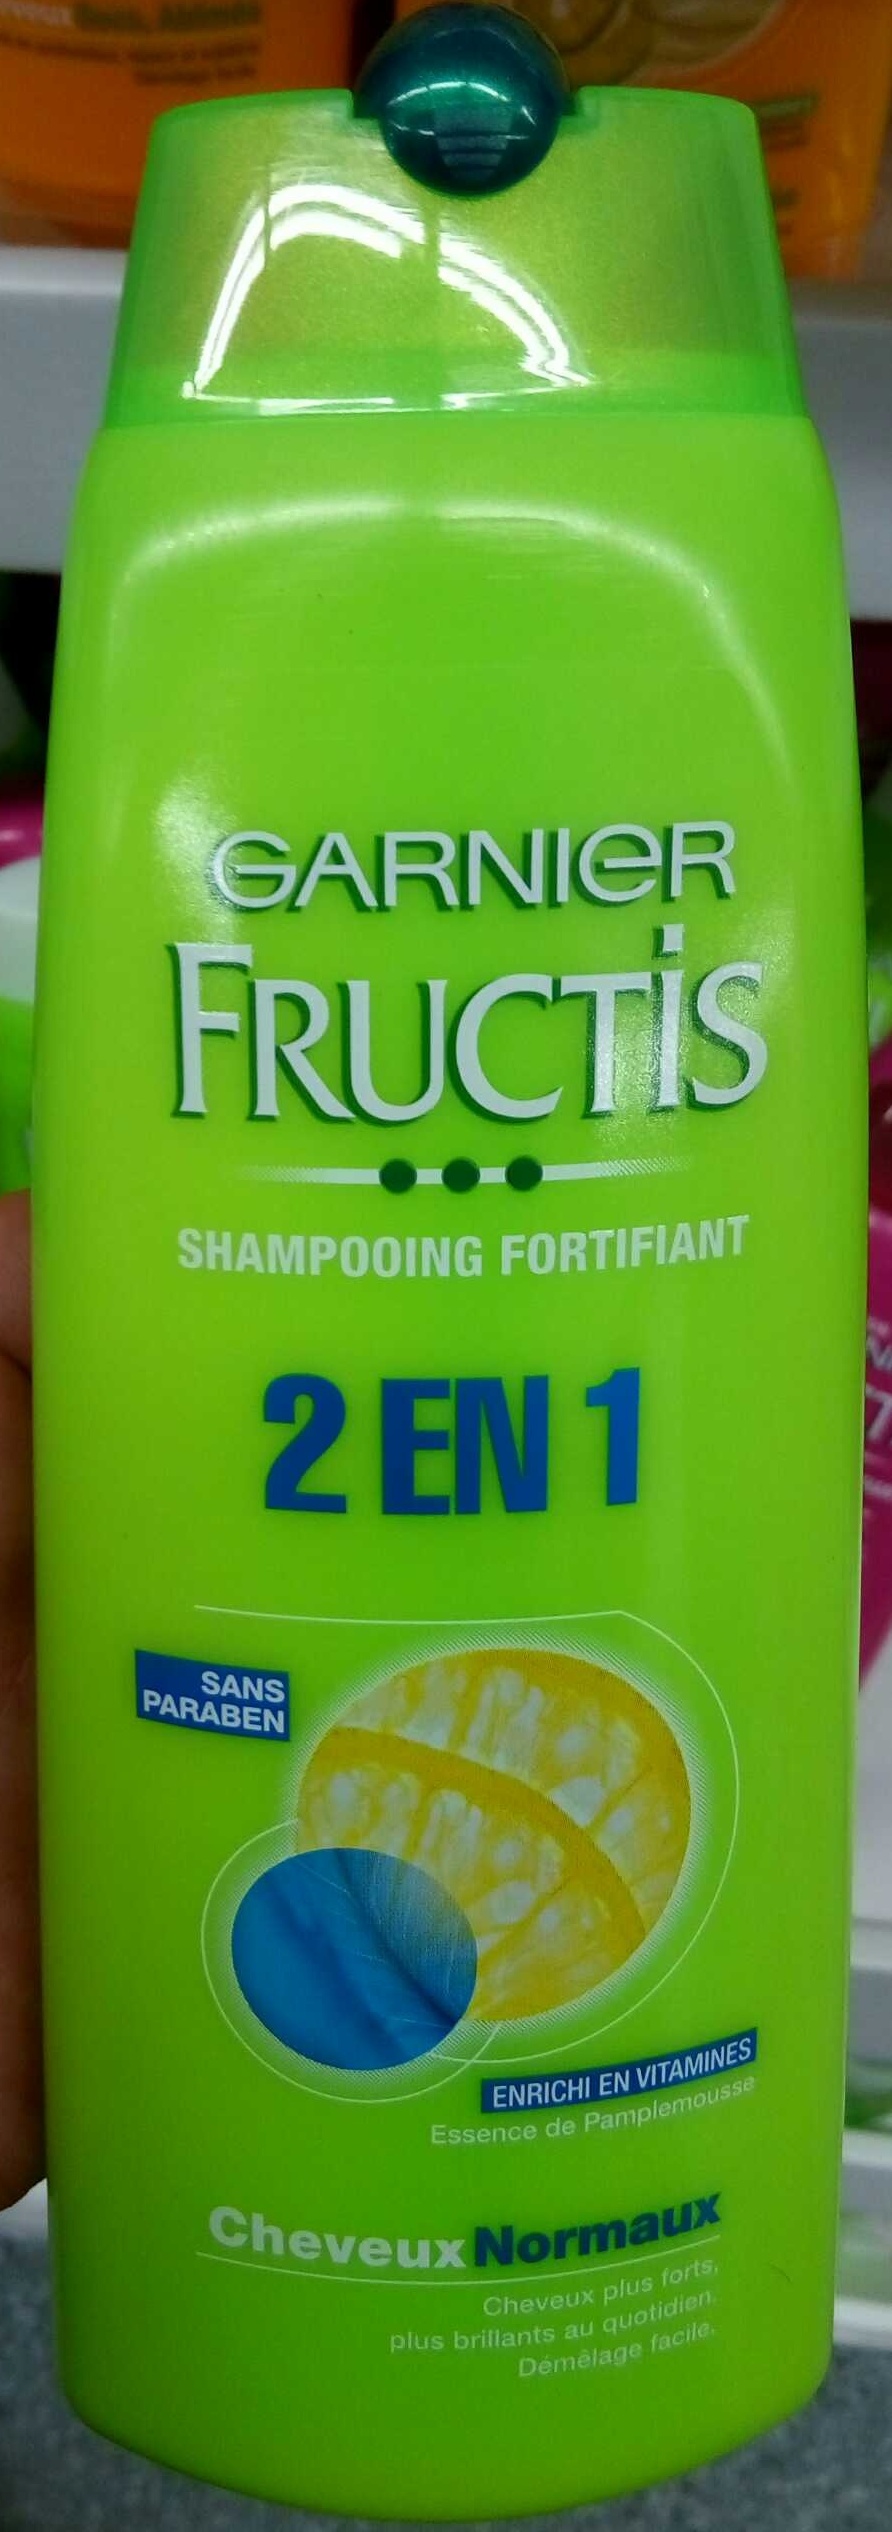 Fructis Shampooing fortifiant 2 en 1 - Produit - fr